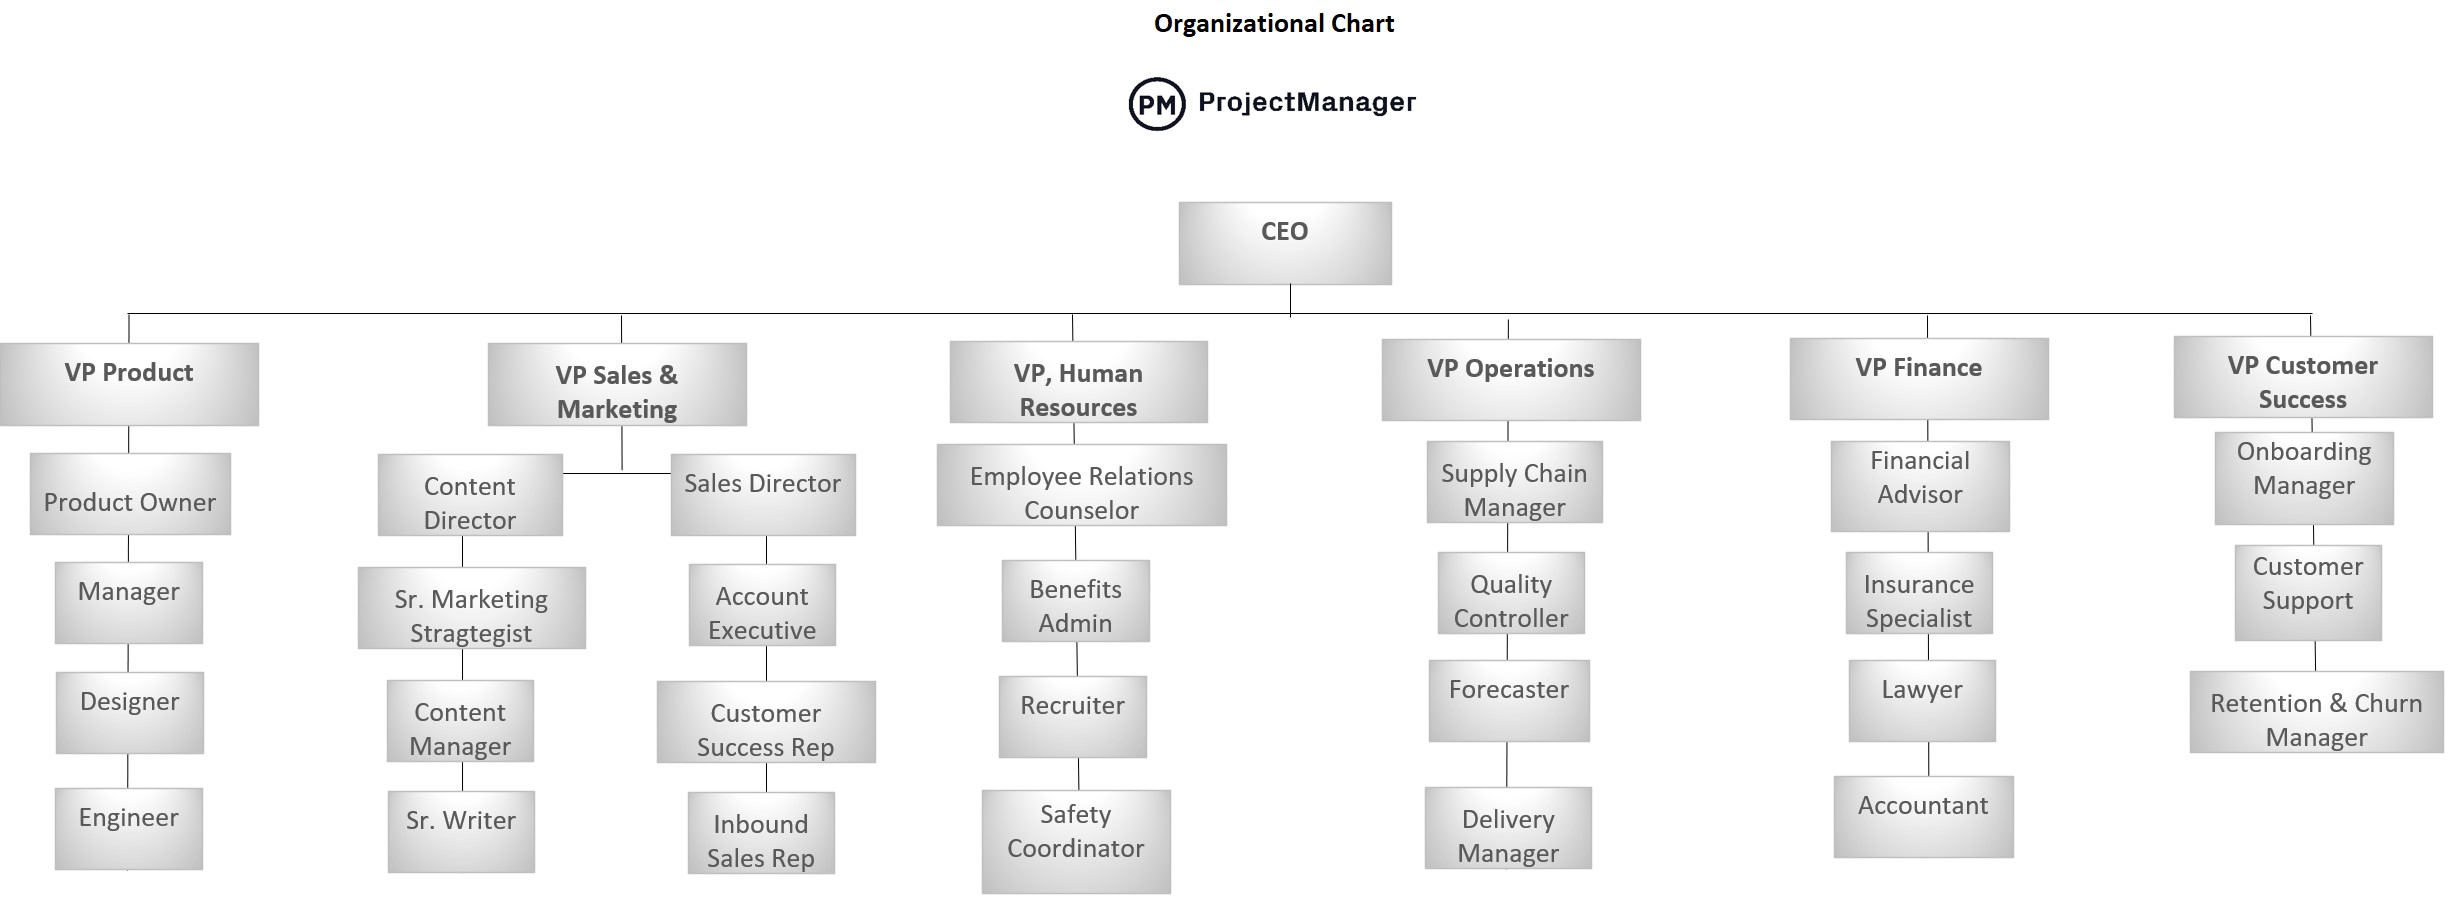 ProjectManager's organizational chart template